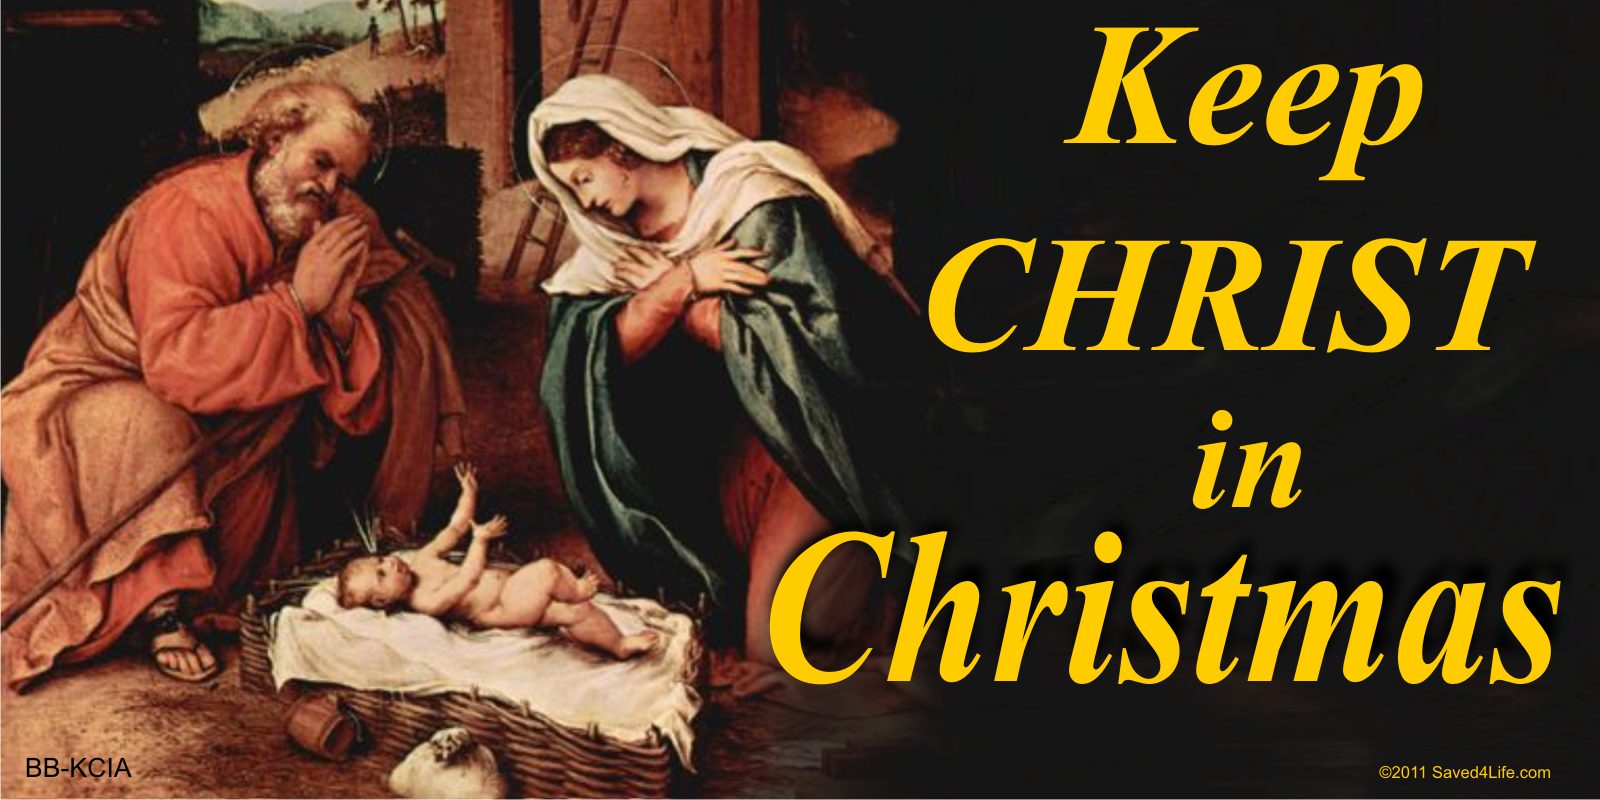 Keep Christ In Christmas (Nativity) 1.25x2 Keychain